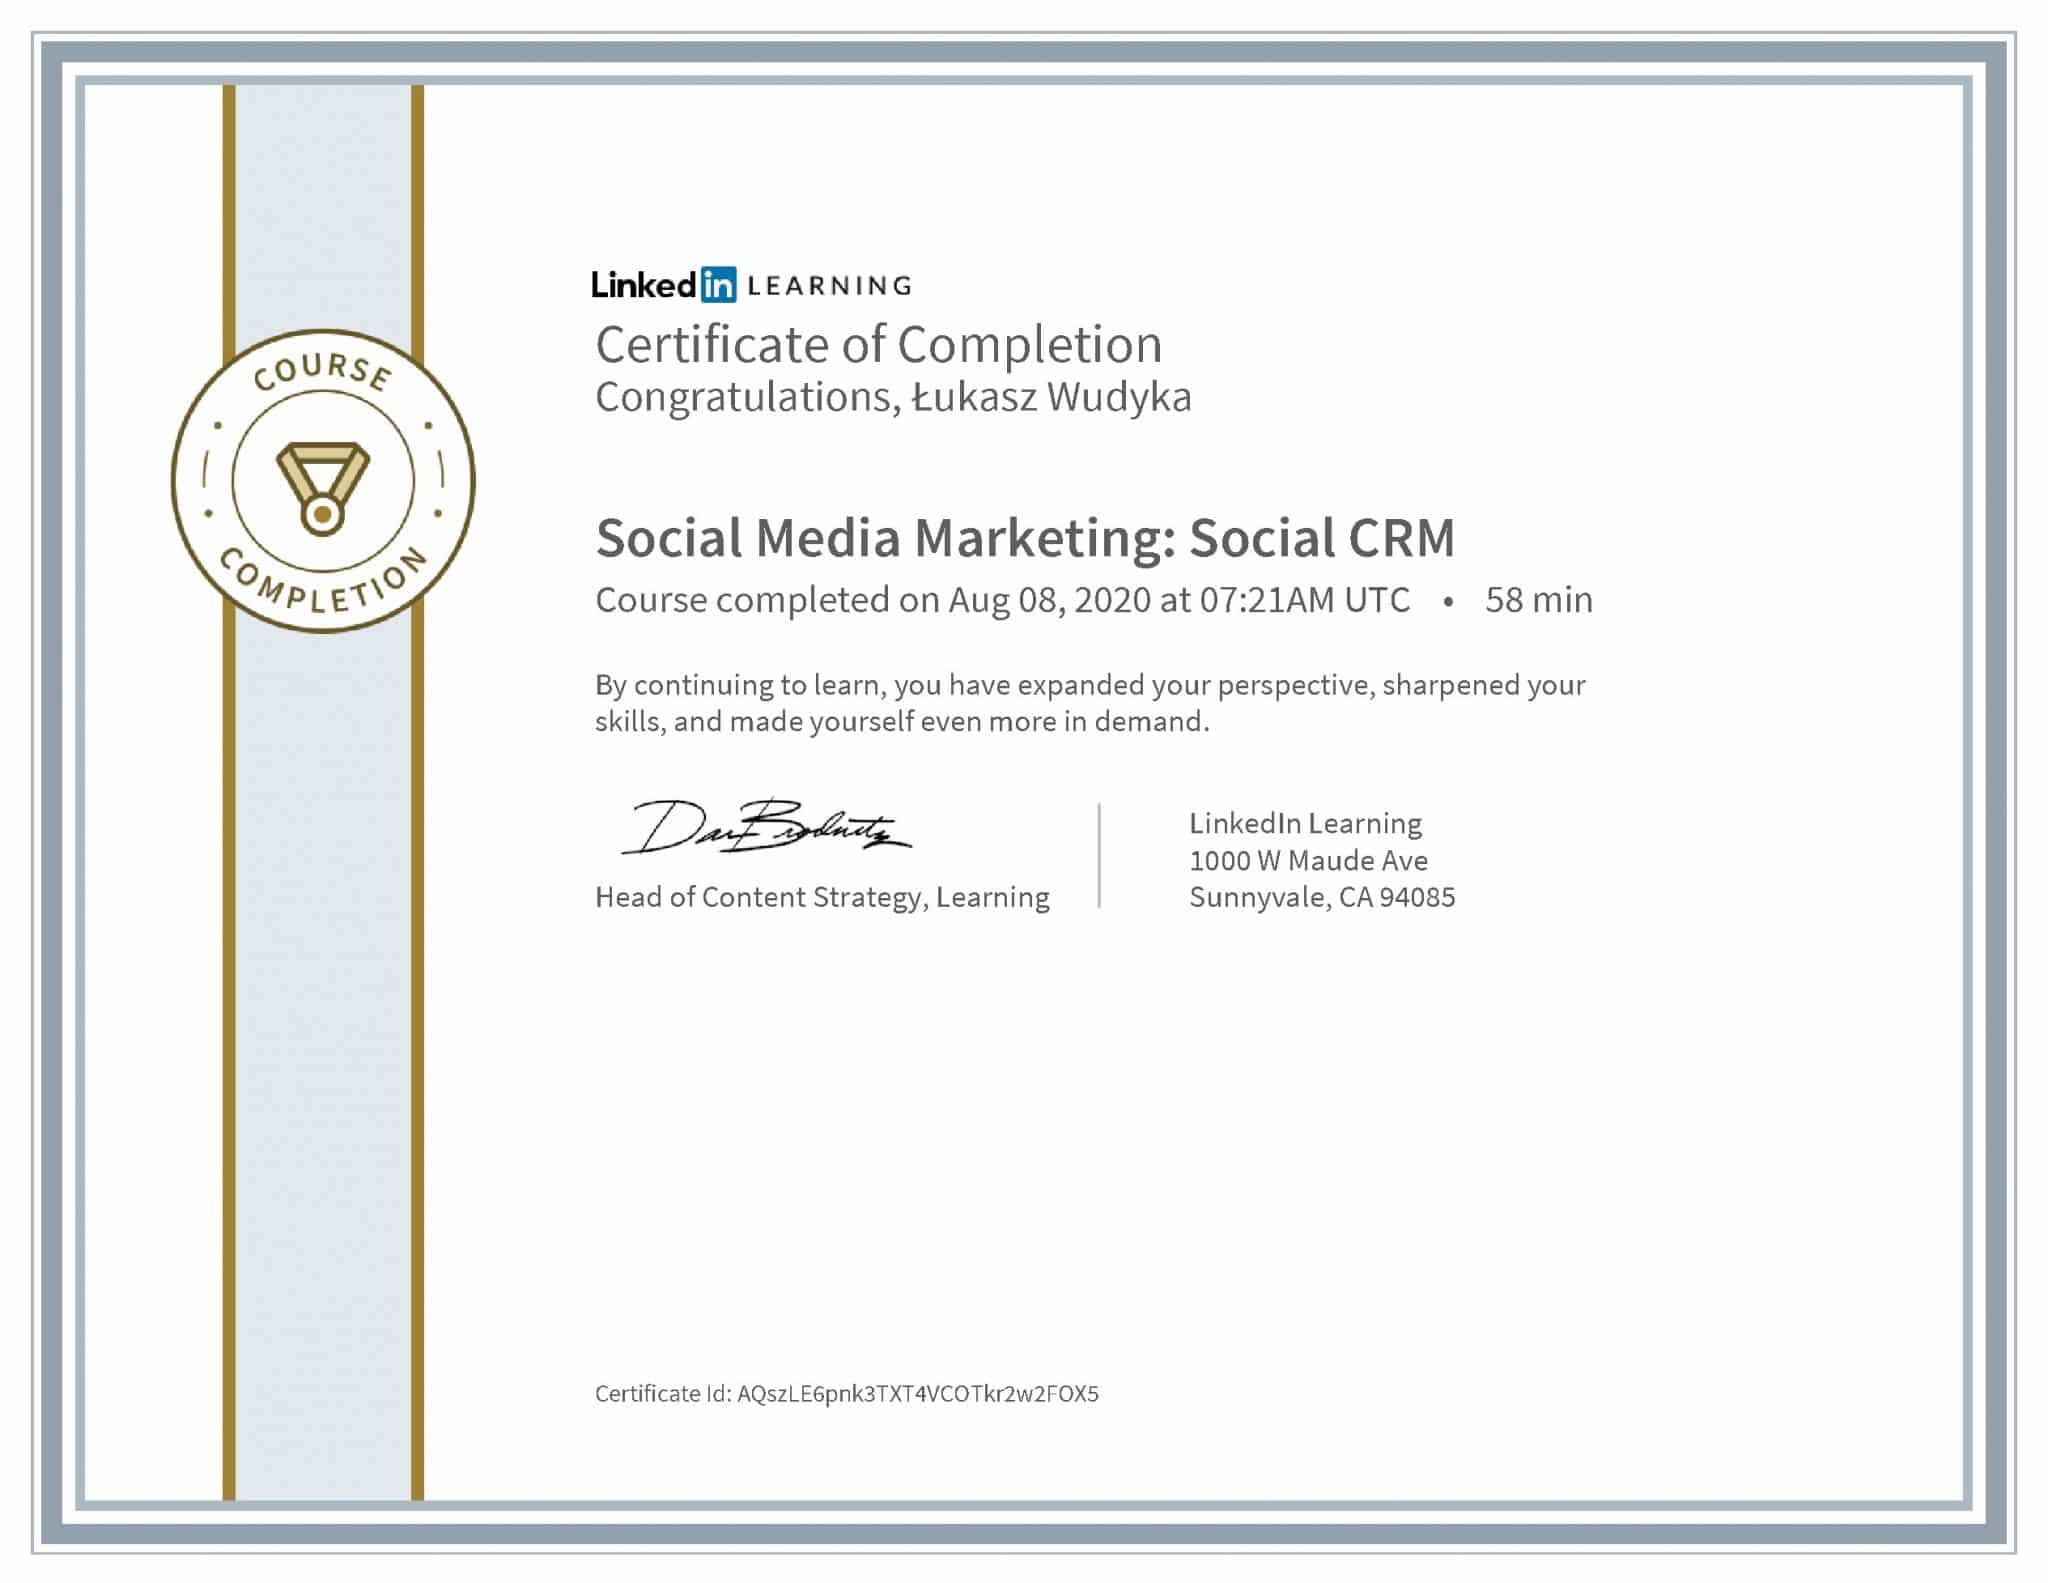 Łukasz Wudyka certyfikat LinkedIn Social Media Marketing: Social CRM